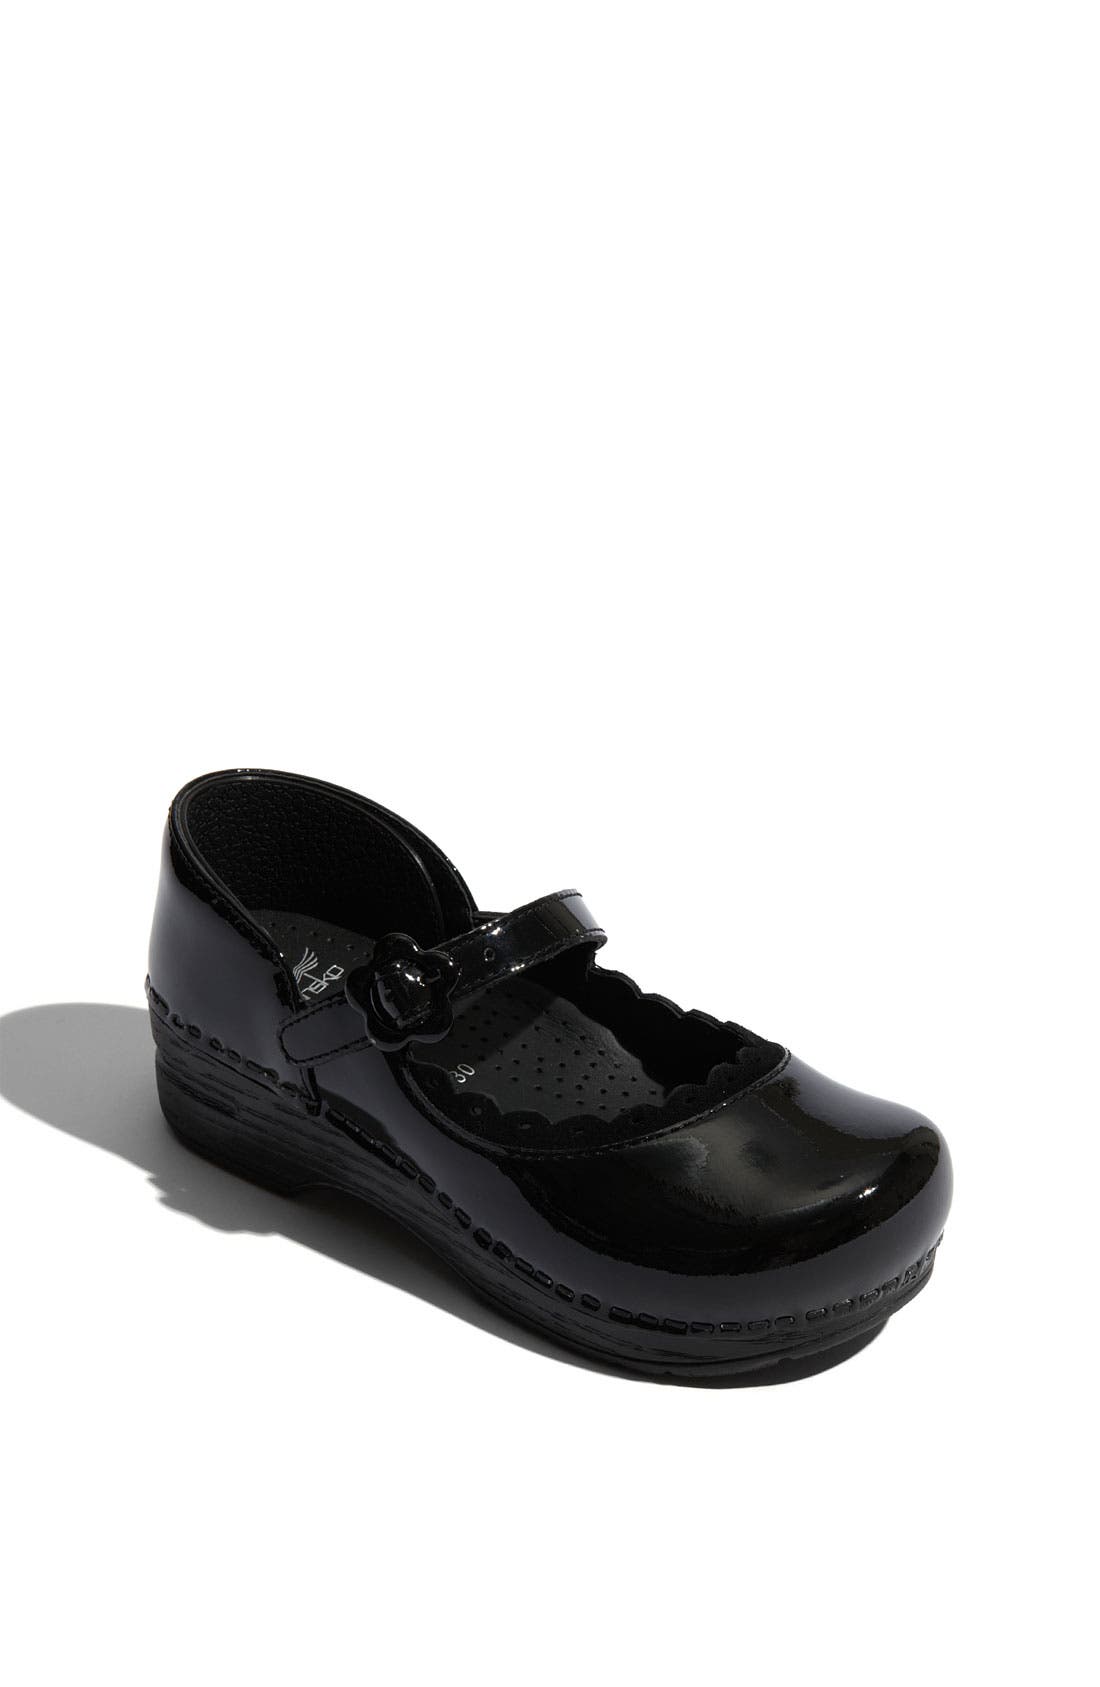 dansko shoes for kids